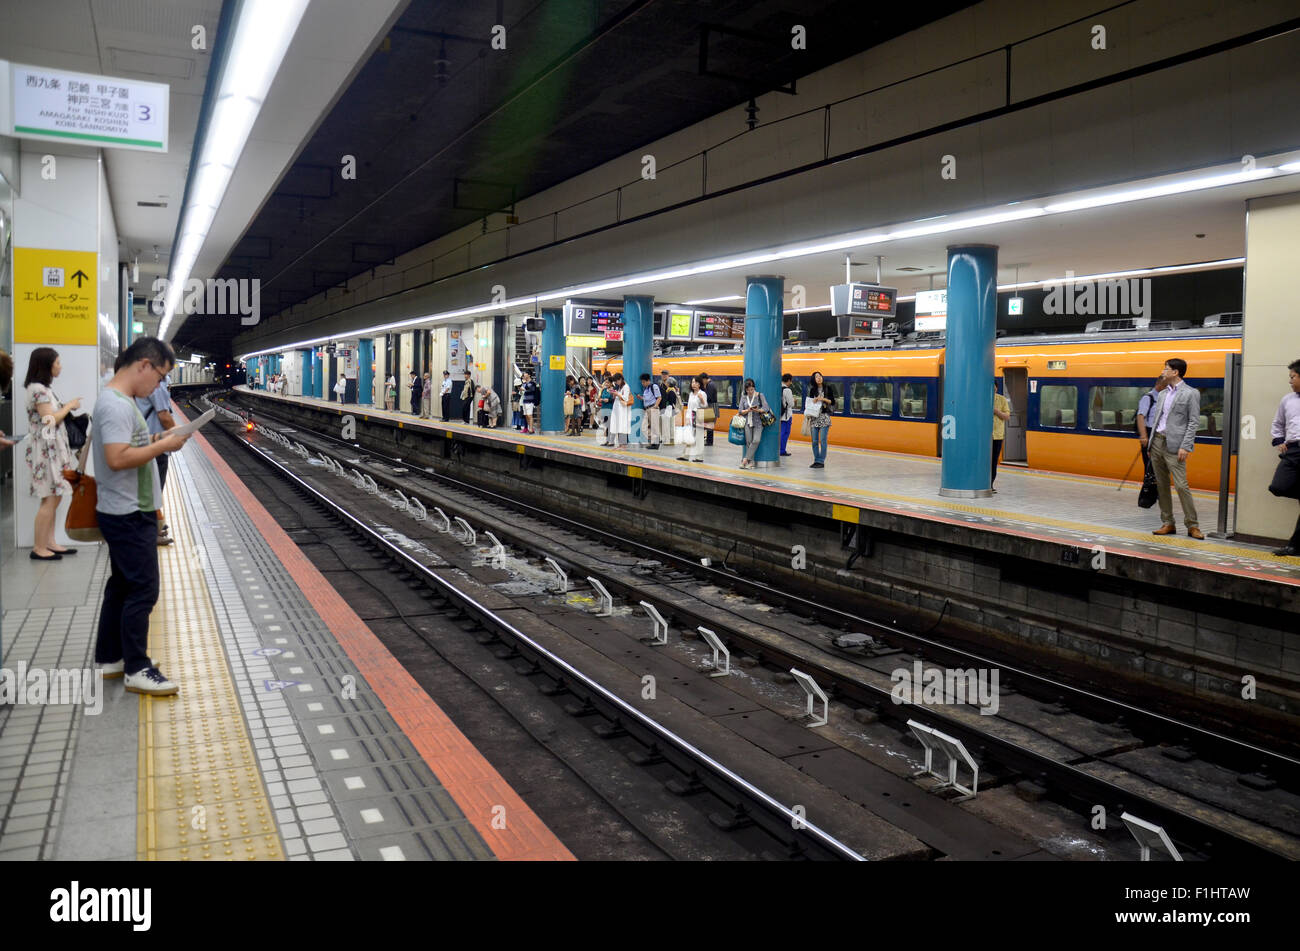 People waiting subway train Kintetsu Nara station on July 9, 2015 in Nara, Japan Stock Photo